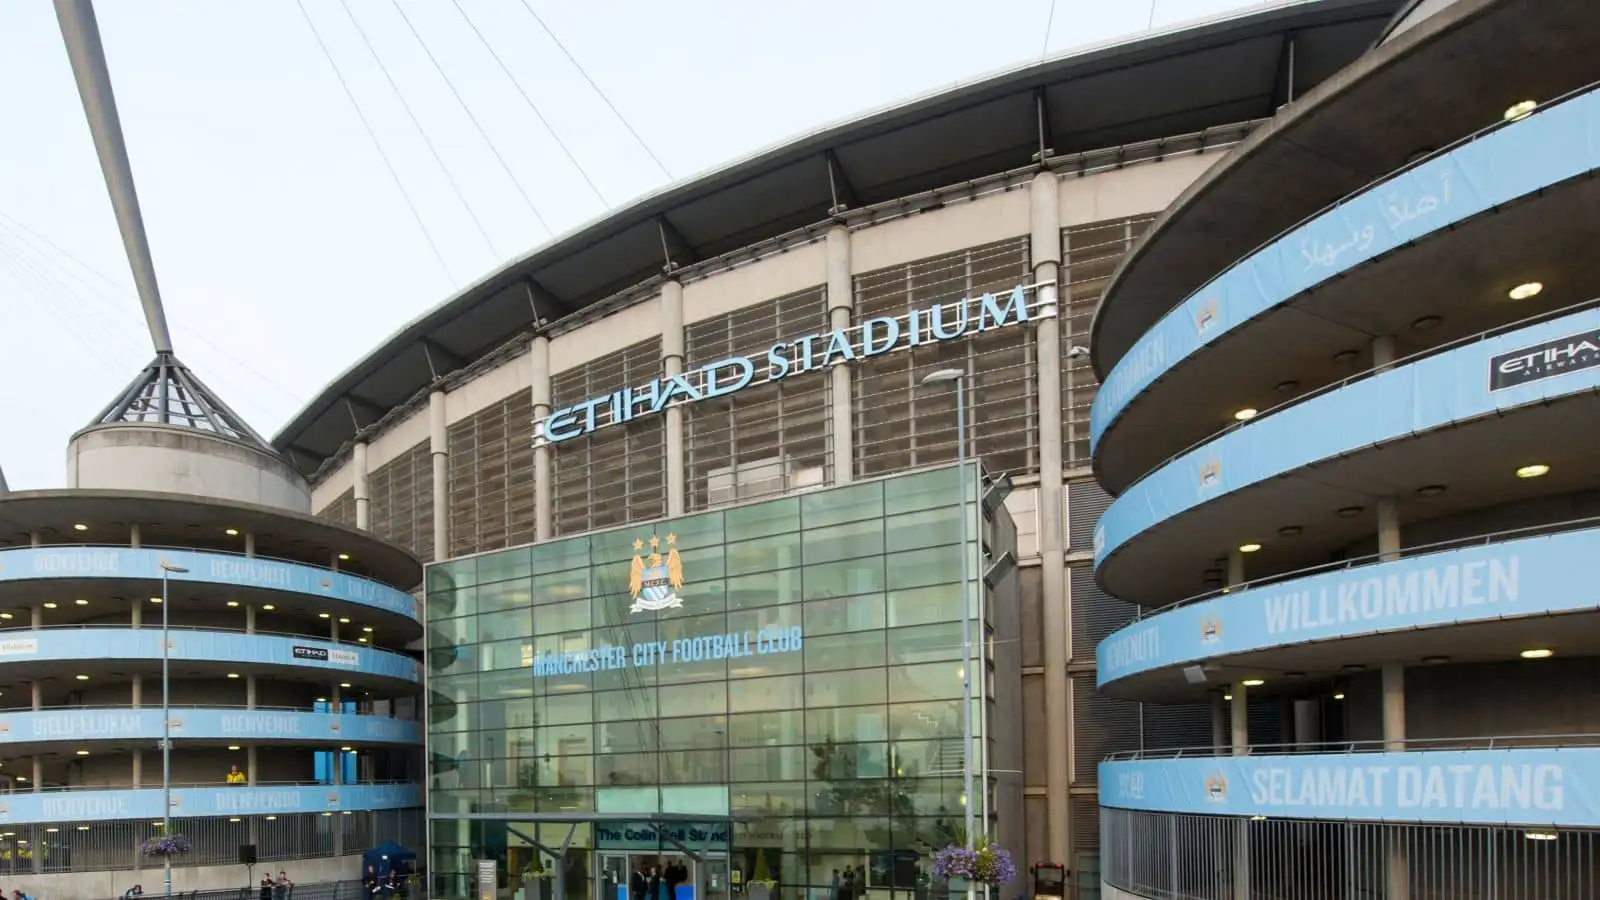 An external view of the Etihad Stadium, home of Manchester City Football Club